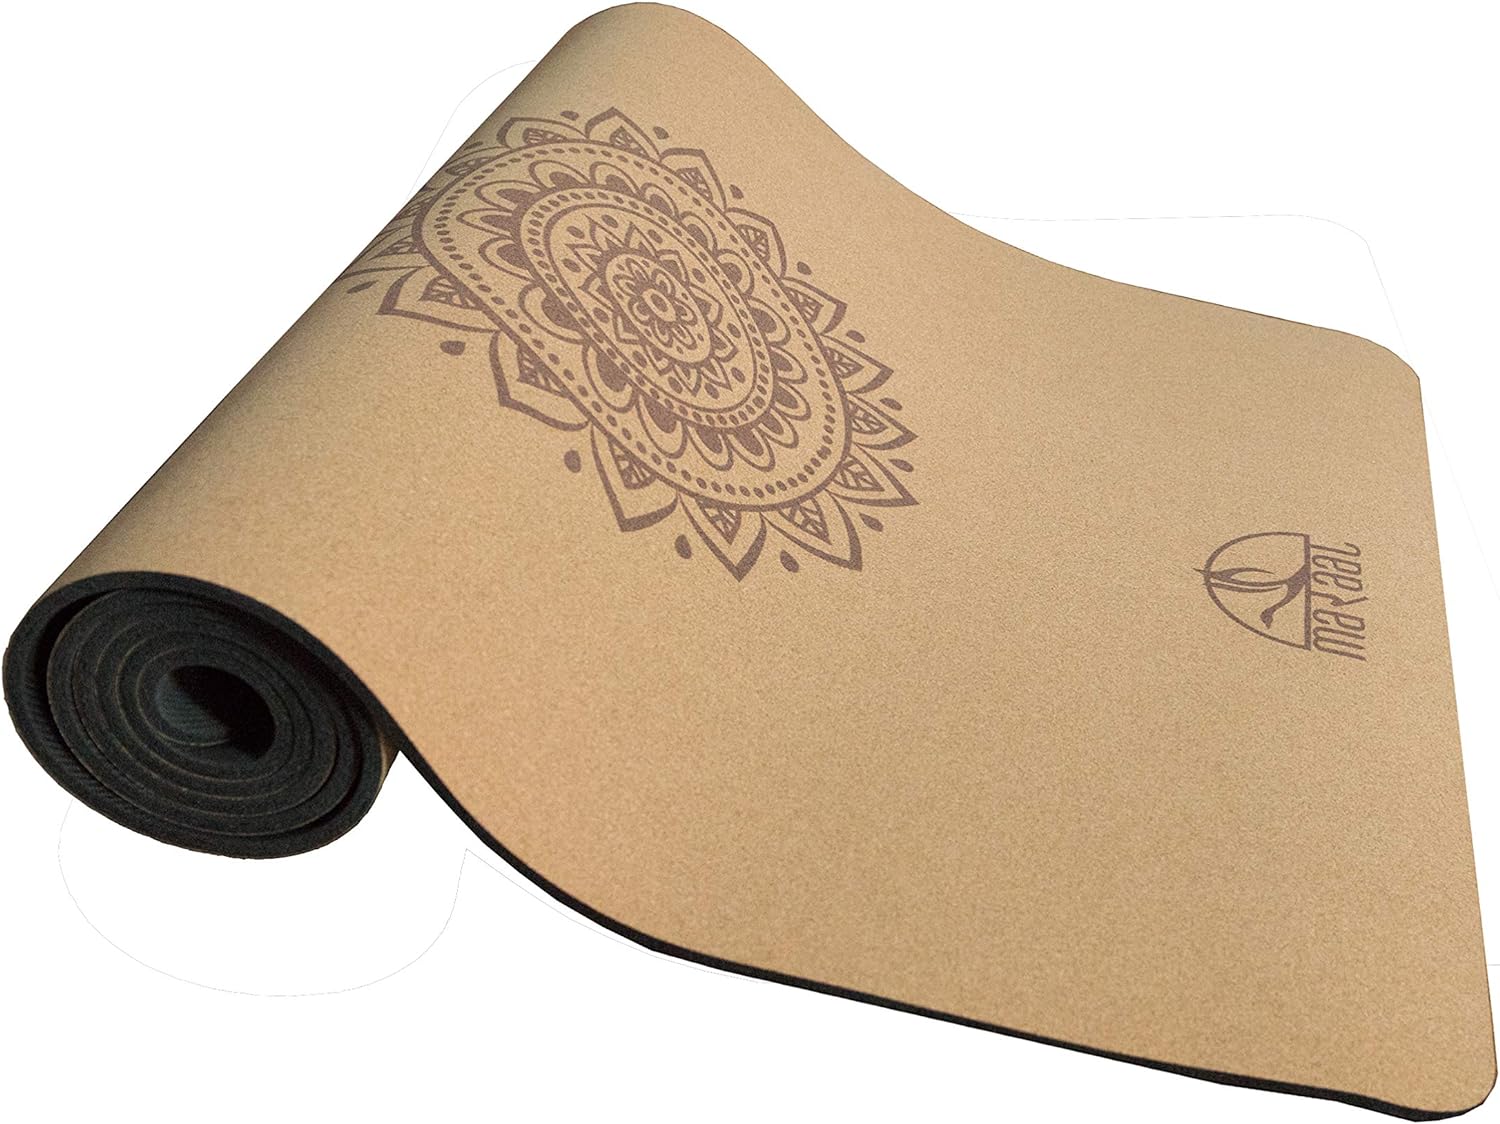 Gaiam Athletic Yoga Series dynaMAT Xtra-Large Mat, Black/Gray, 5mm, Mats -   Canada